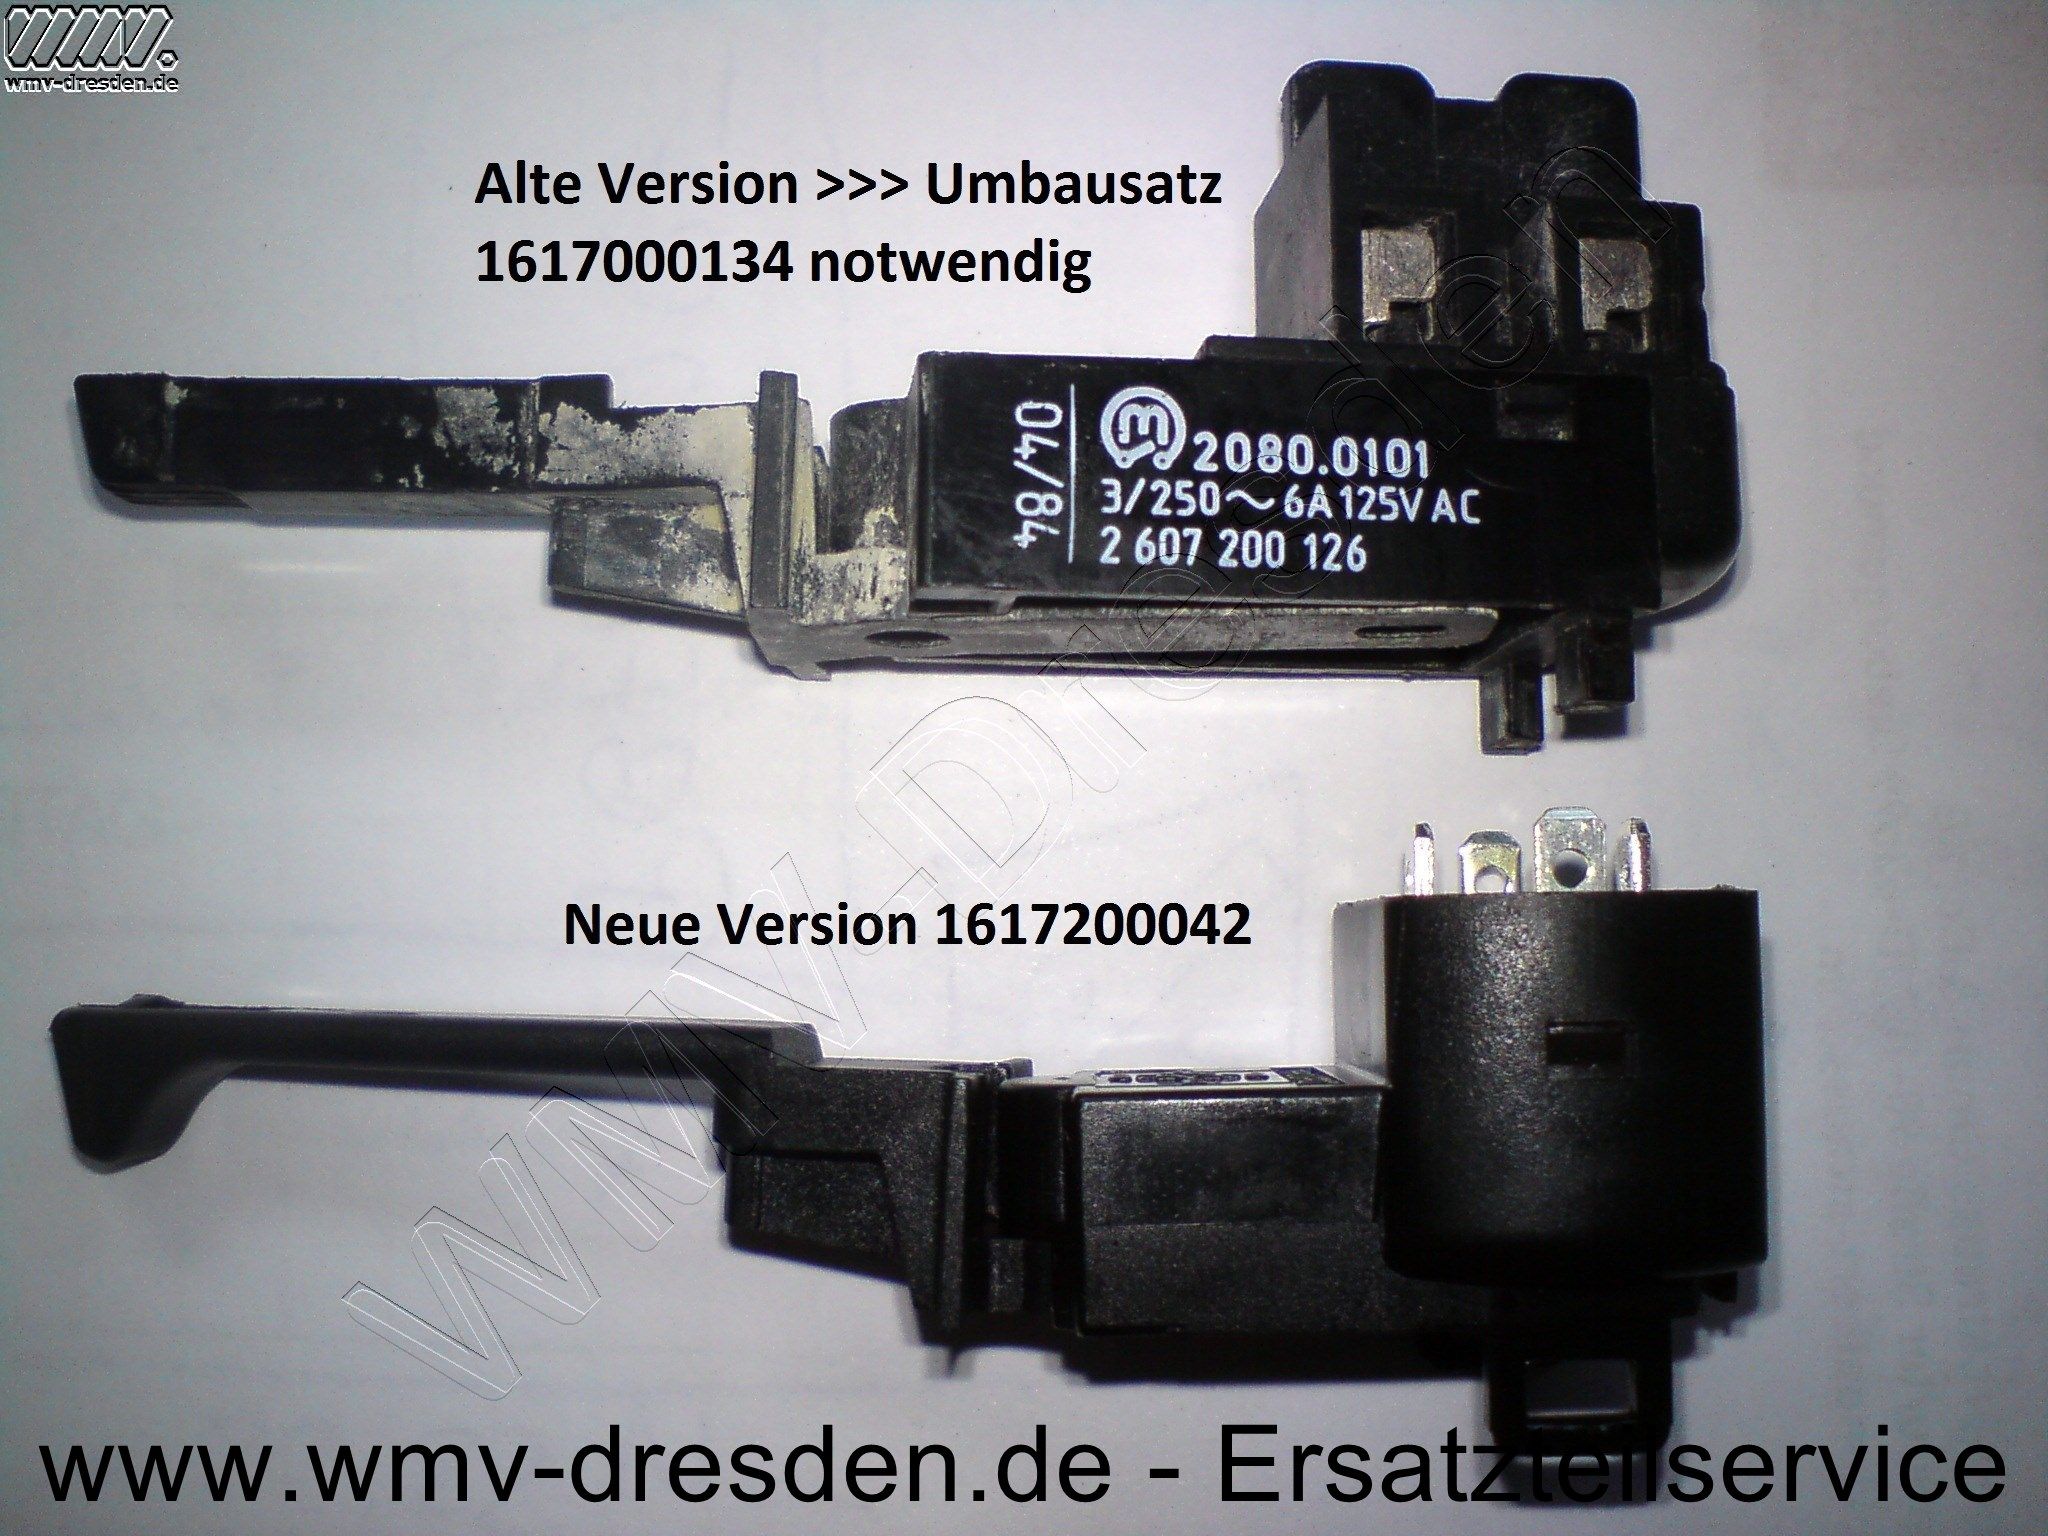 Artikel 1617200042-B17 Hersteller: Bosch-Skil-Dremel 